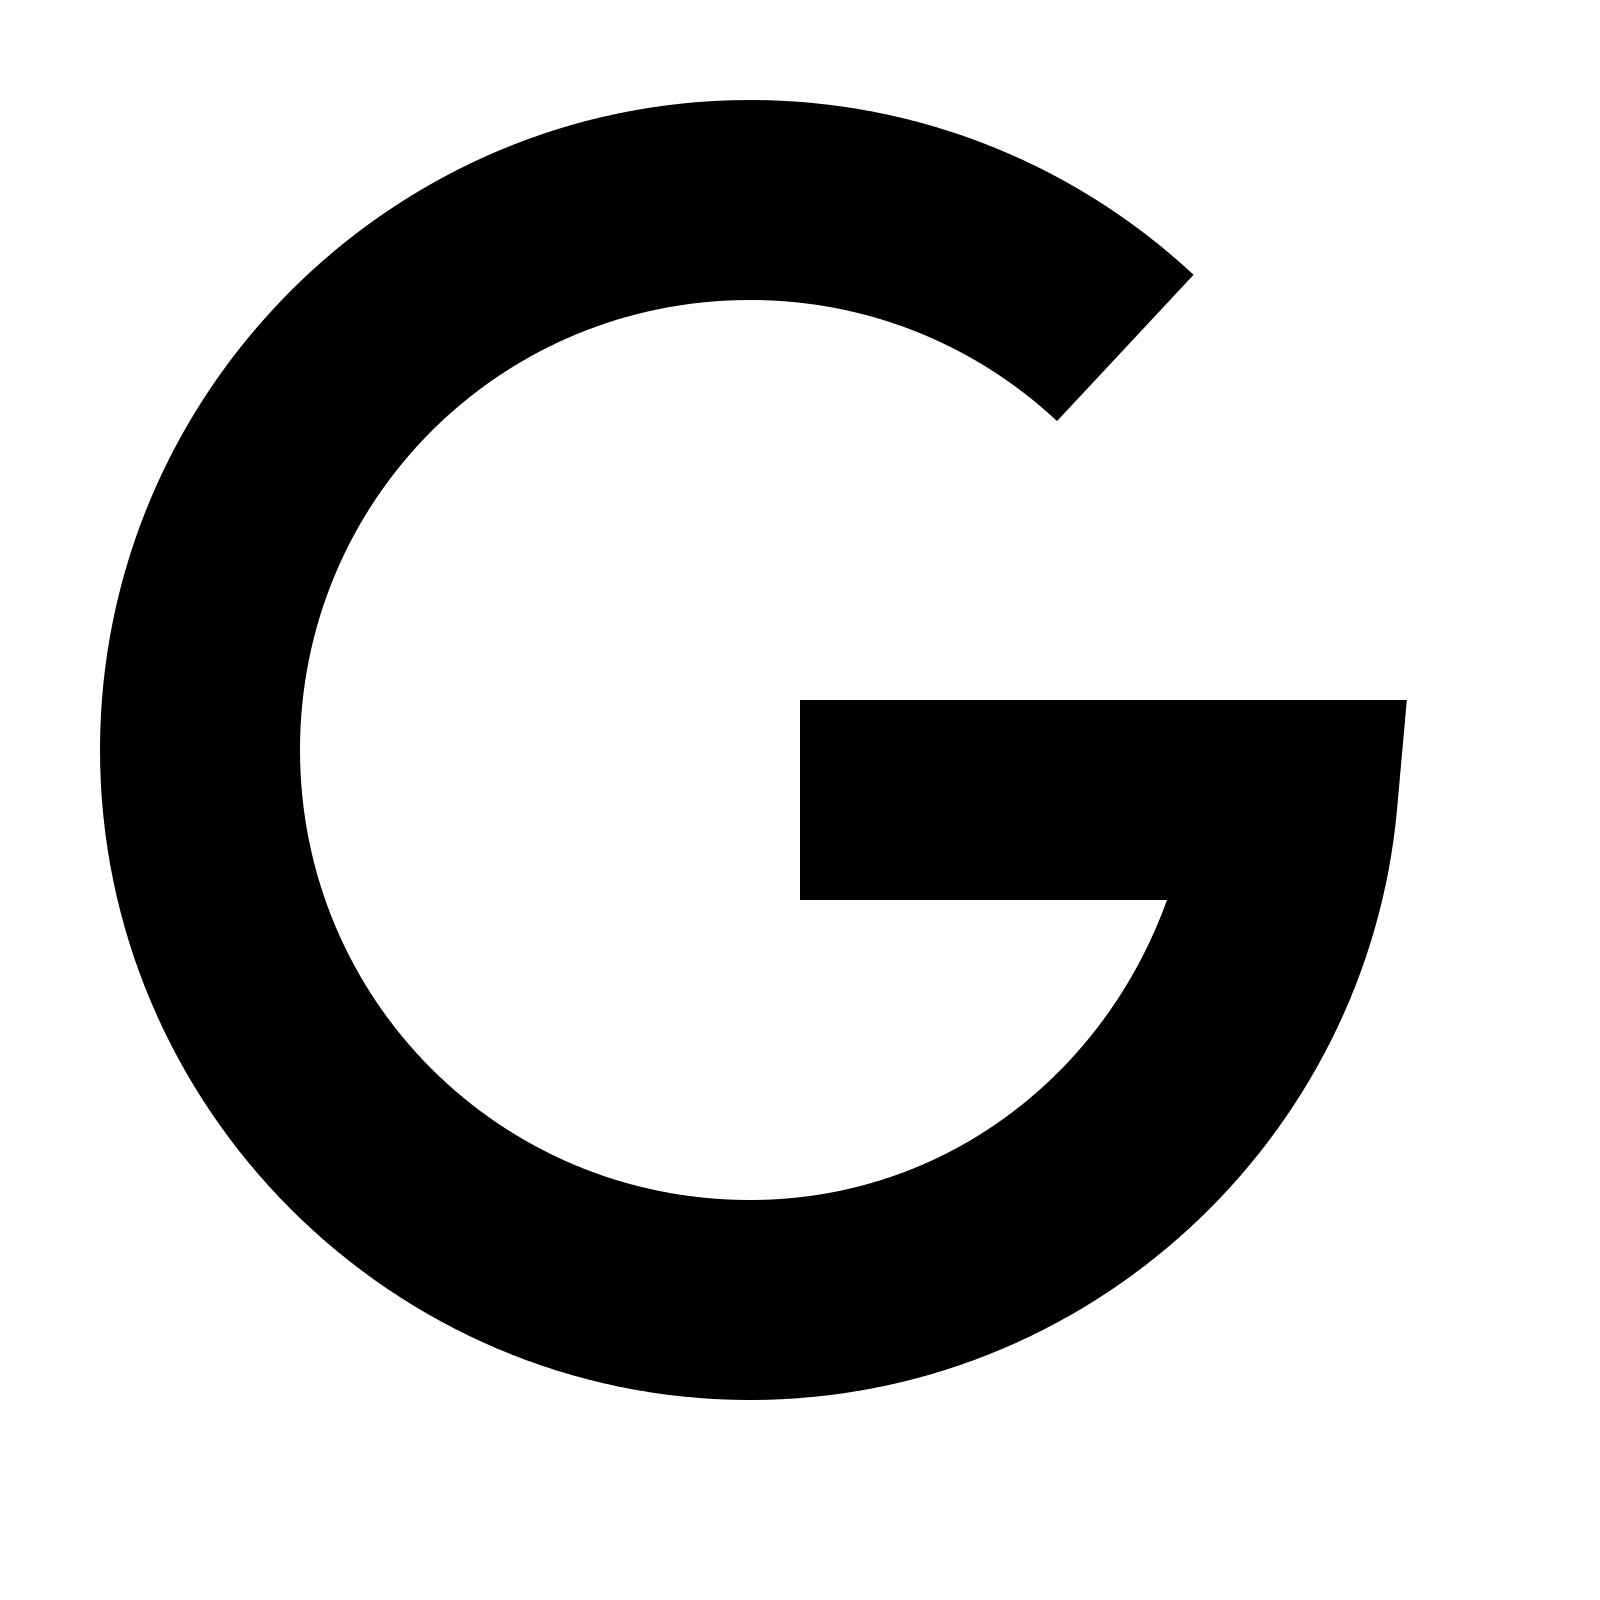 Black and White Google Logo - LogoDix - Google Logo Black